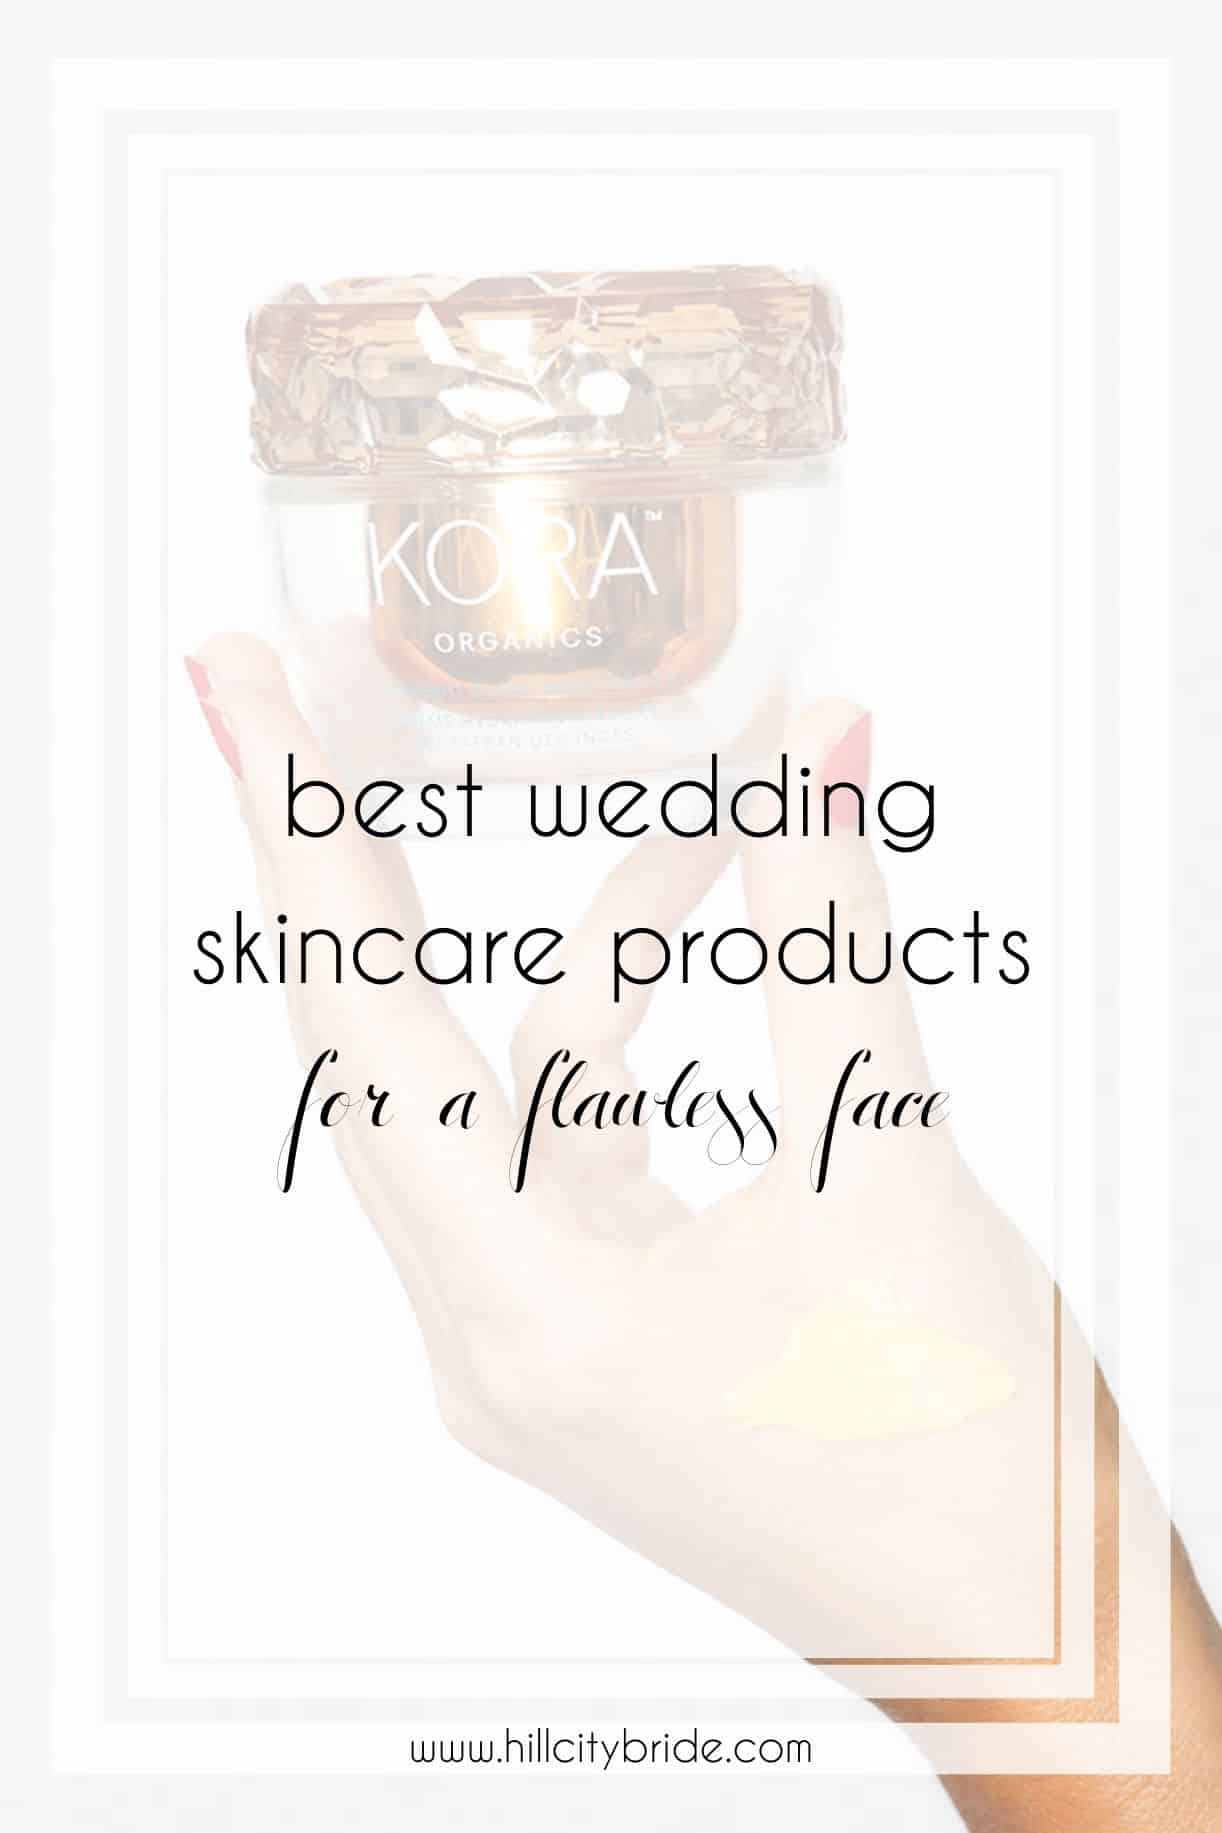 Best Wedding Skincare Products from Kora Organics